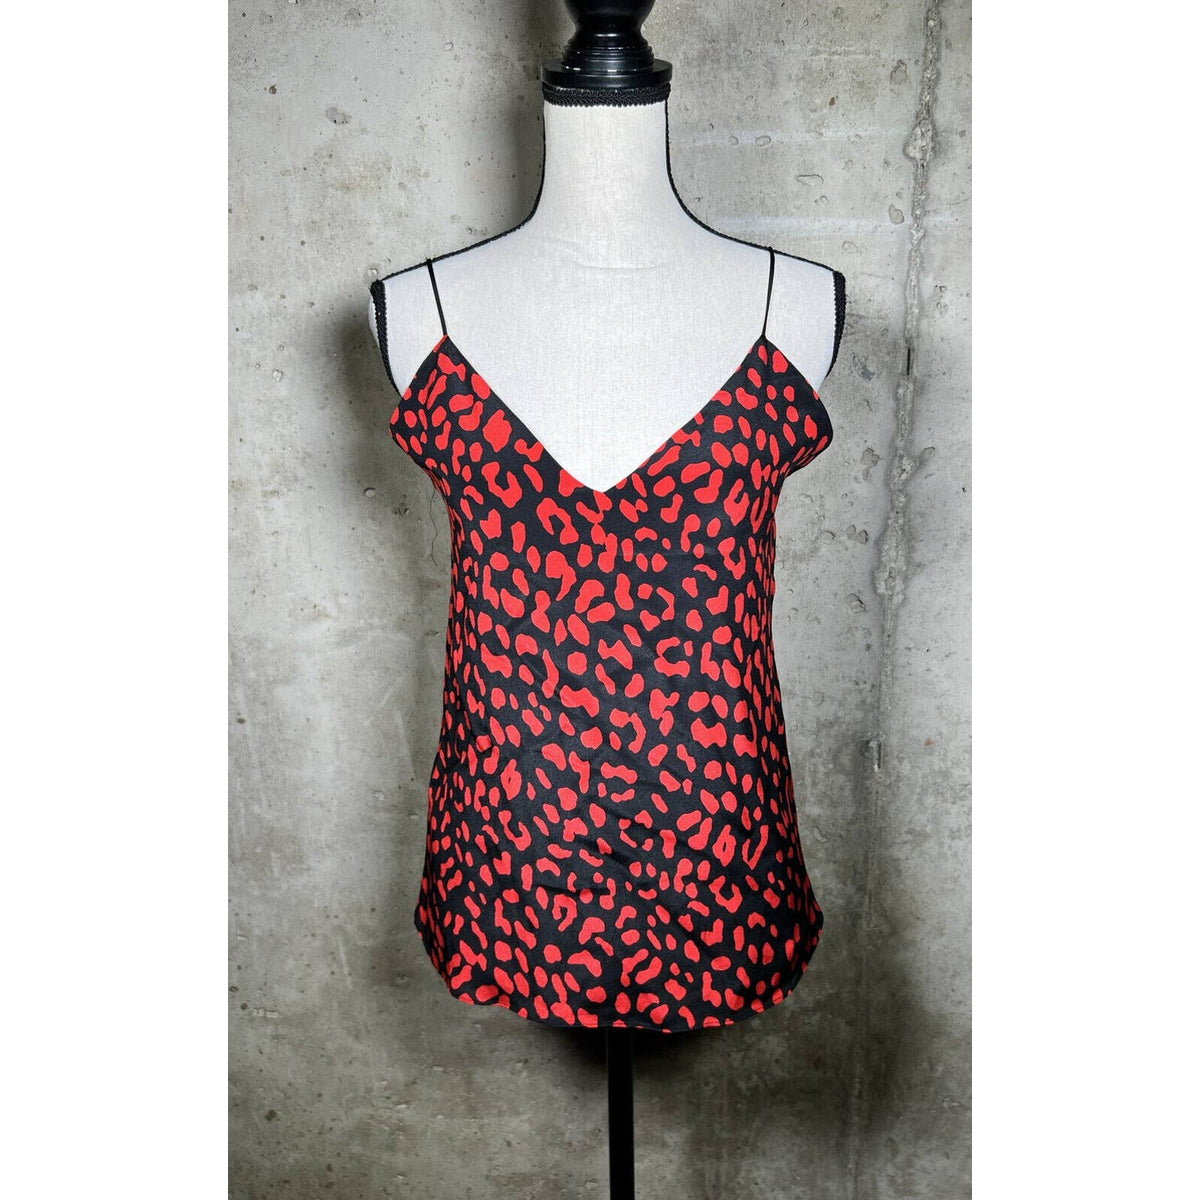 Alice + Olivia Red Leopard Sleeveless Blouse Sz. Medium NWT